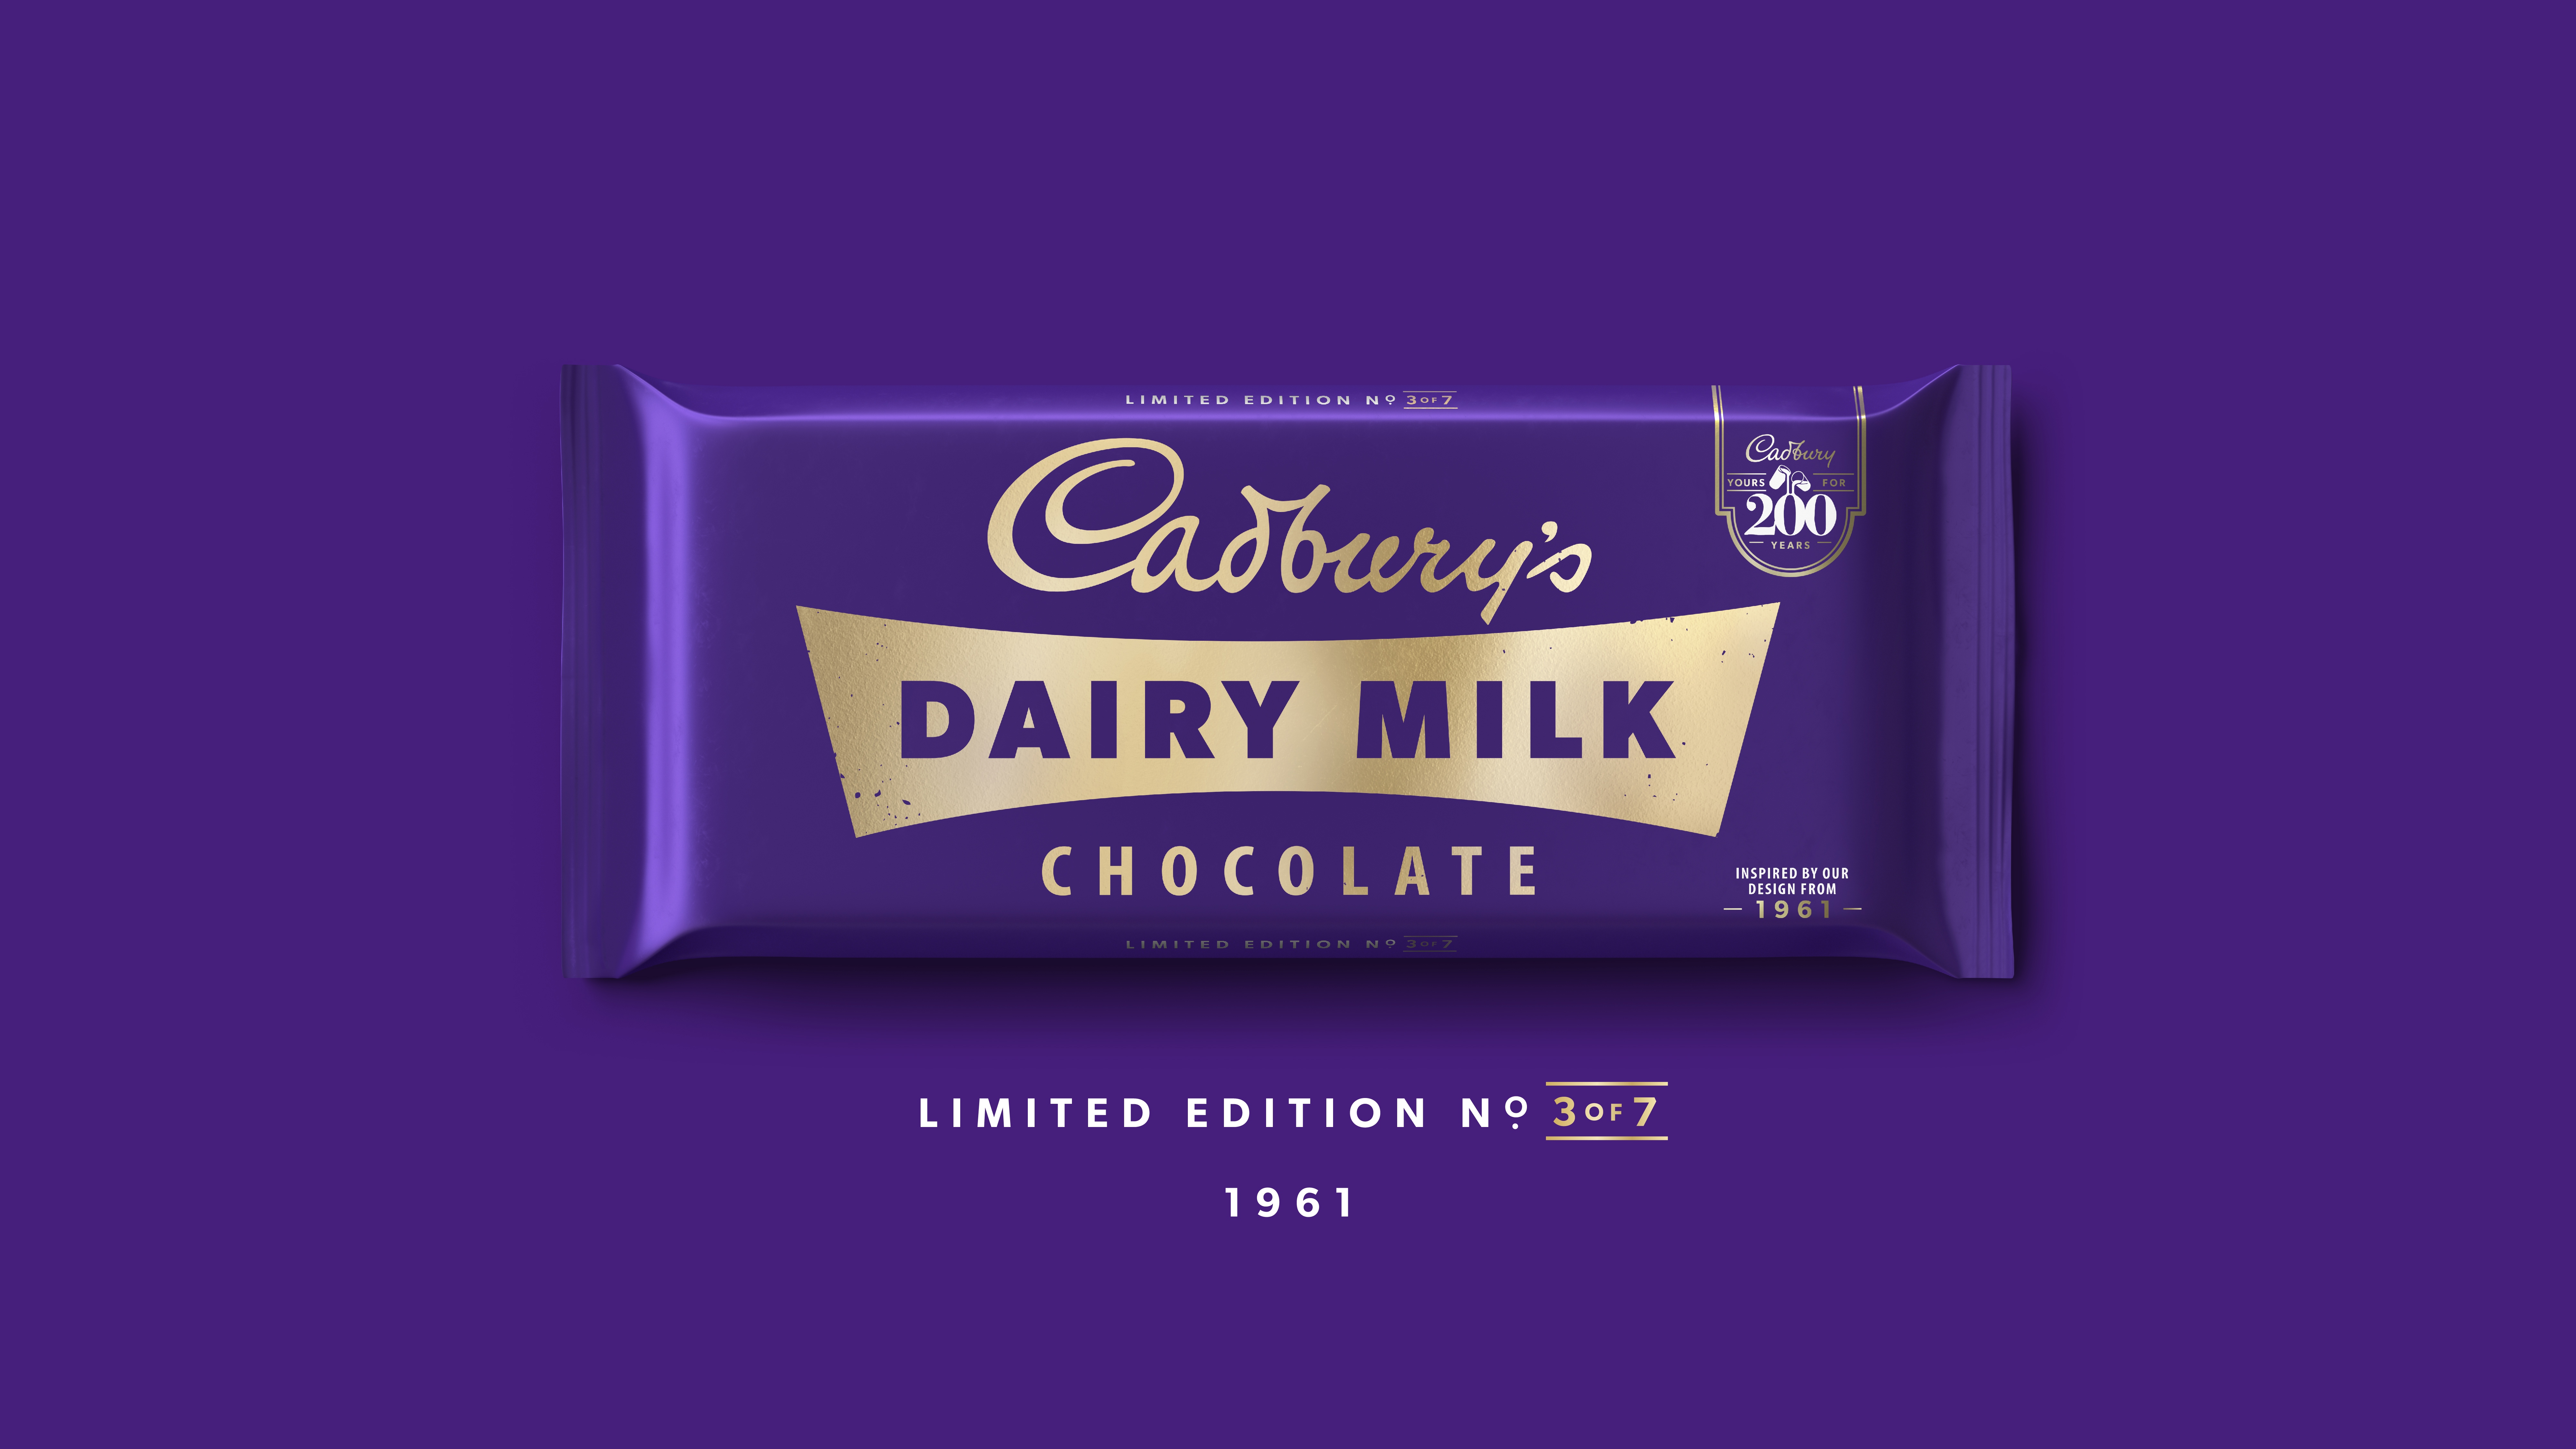 Cadbury celebrates 200 years